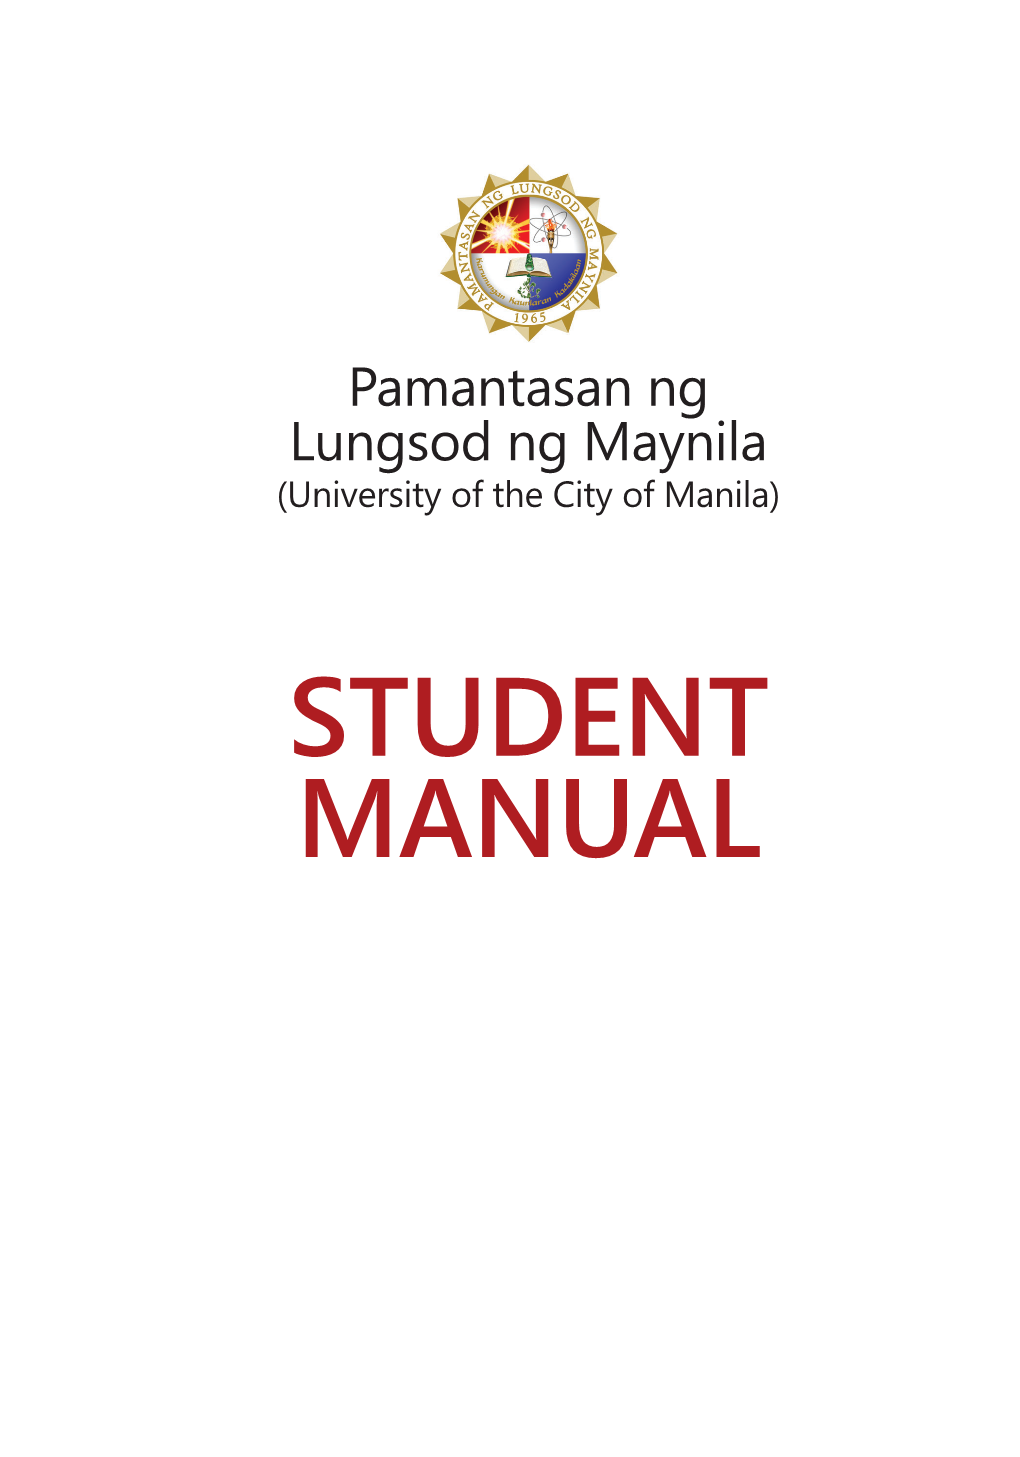 STUDENT MANUAL Copyright © 2017 Office of the Vice President for Public Affairs PAMANTASAN NG LUNGSOD NG MAYNILA